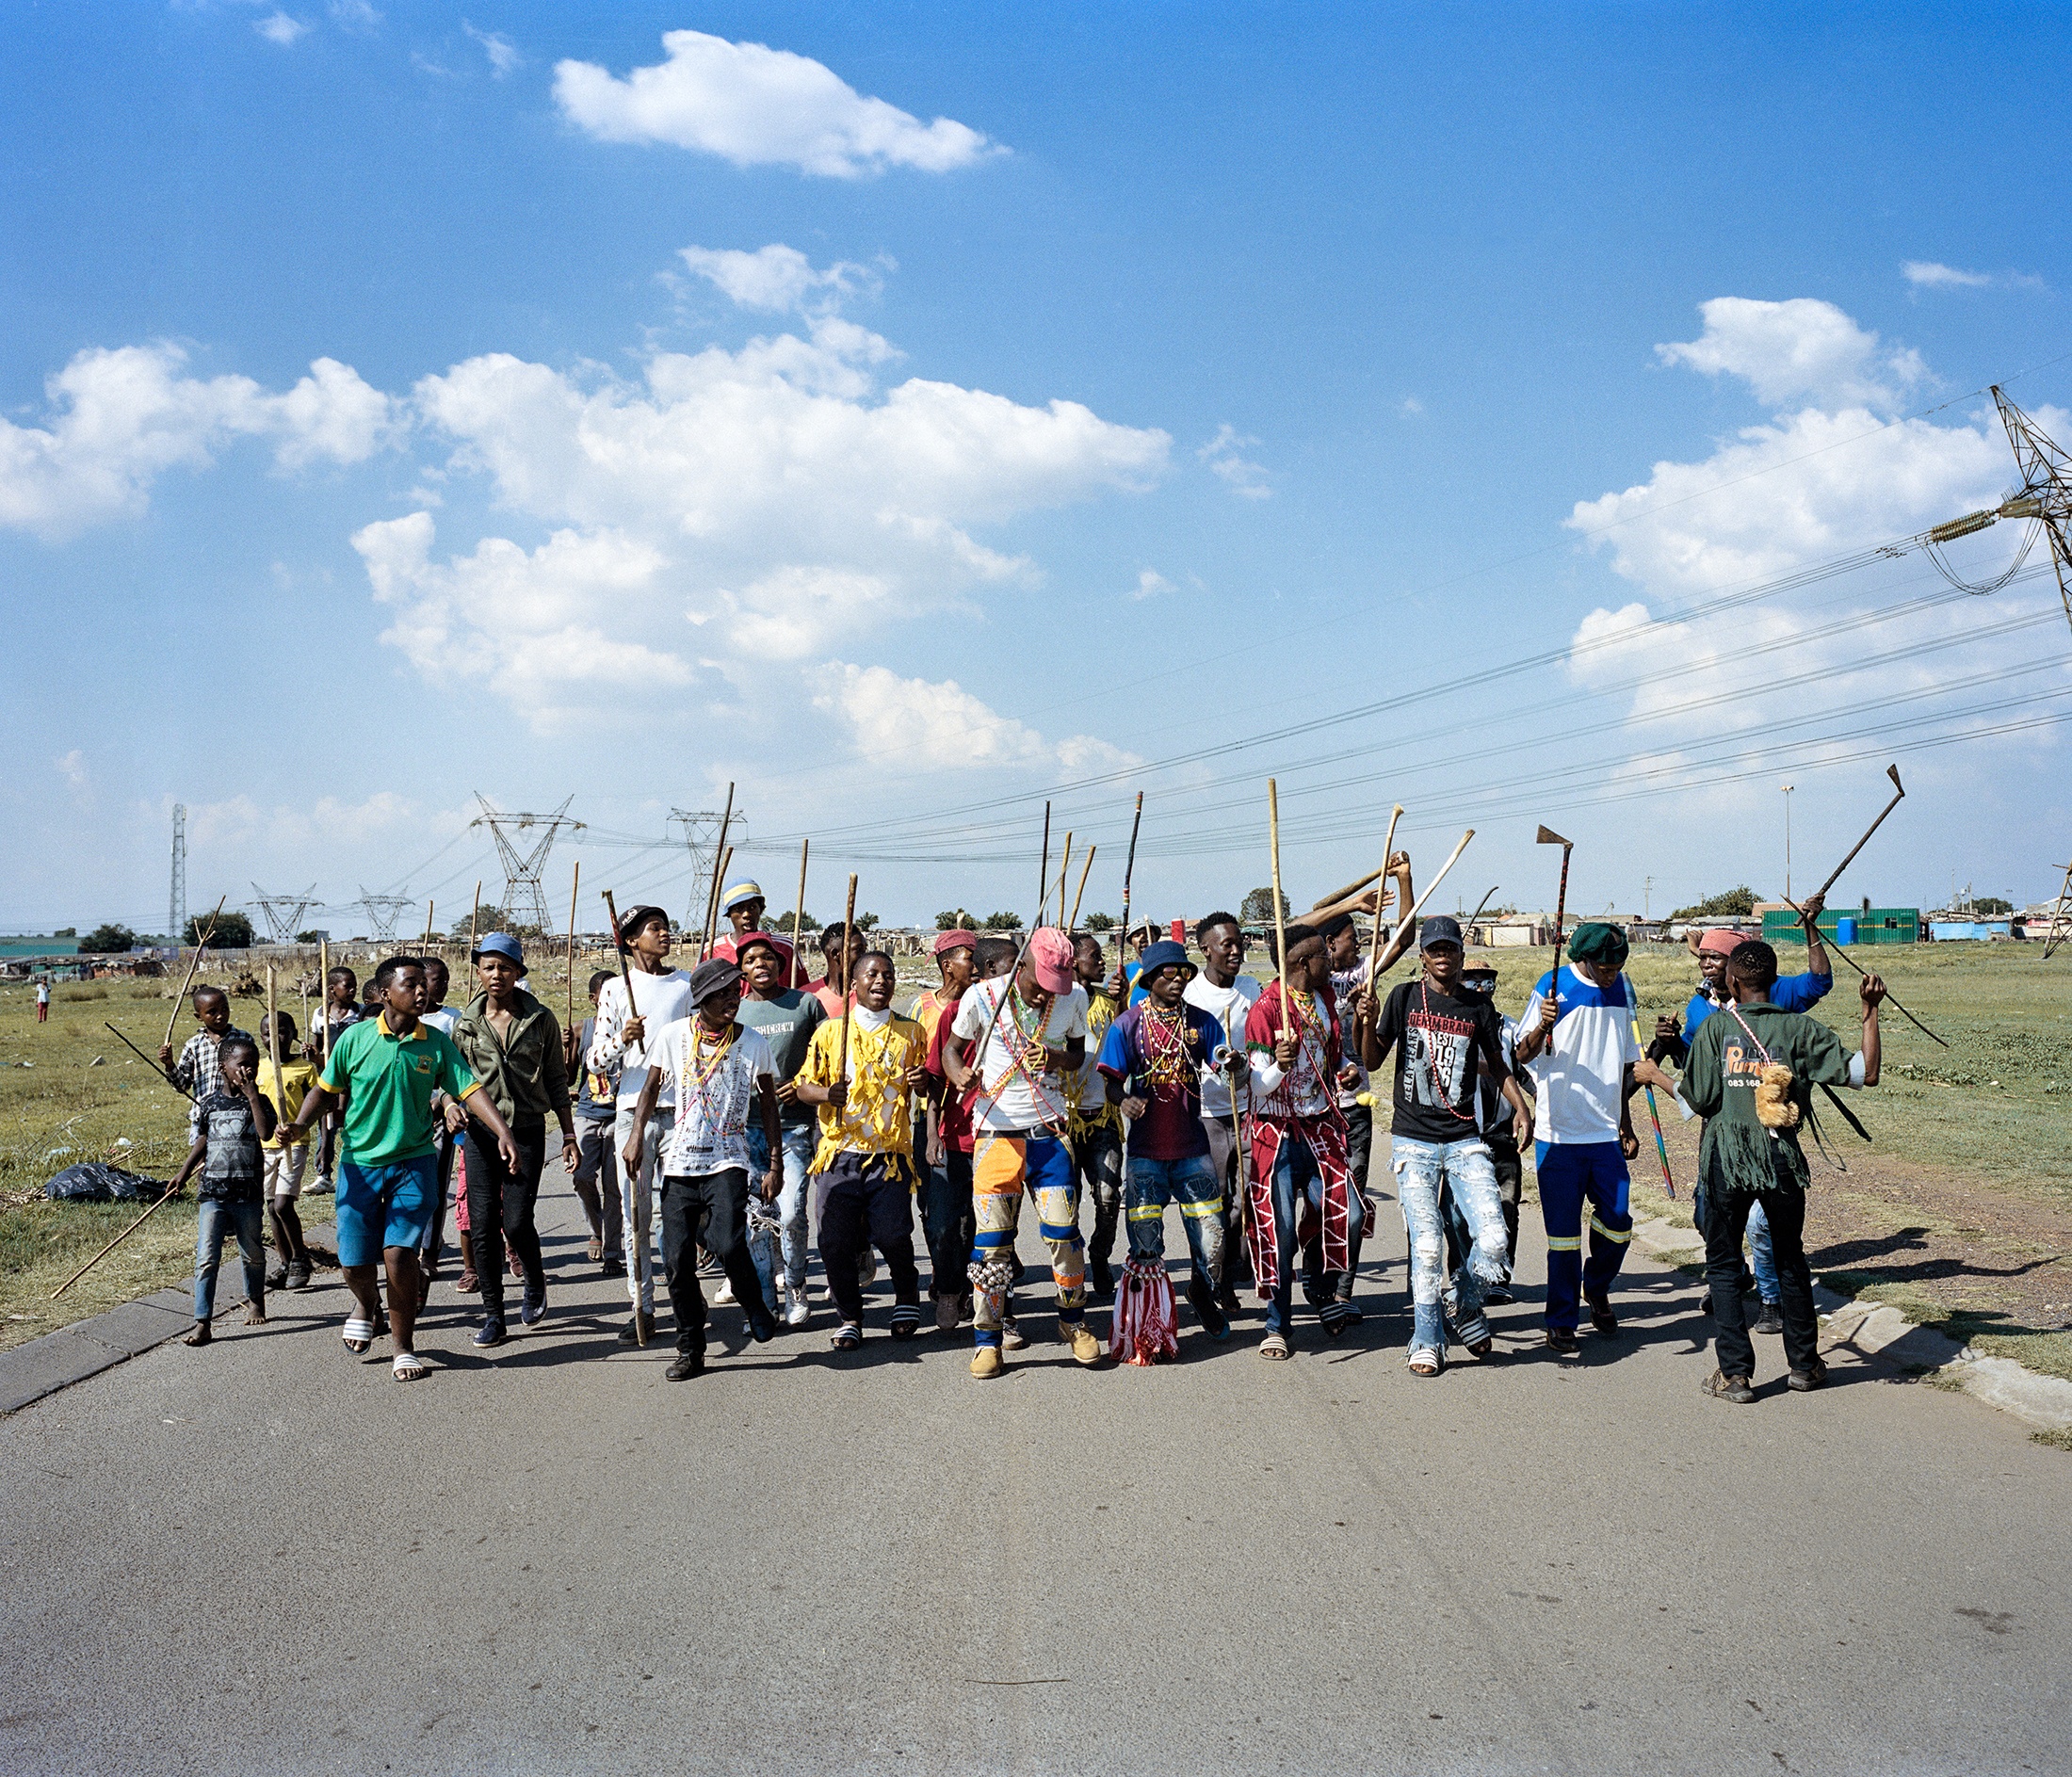 Lindokuhle Sobekwa's photograph 'Amakhwenkwe' depicts individuals marching on a tarred road.
